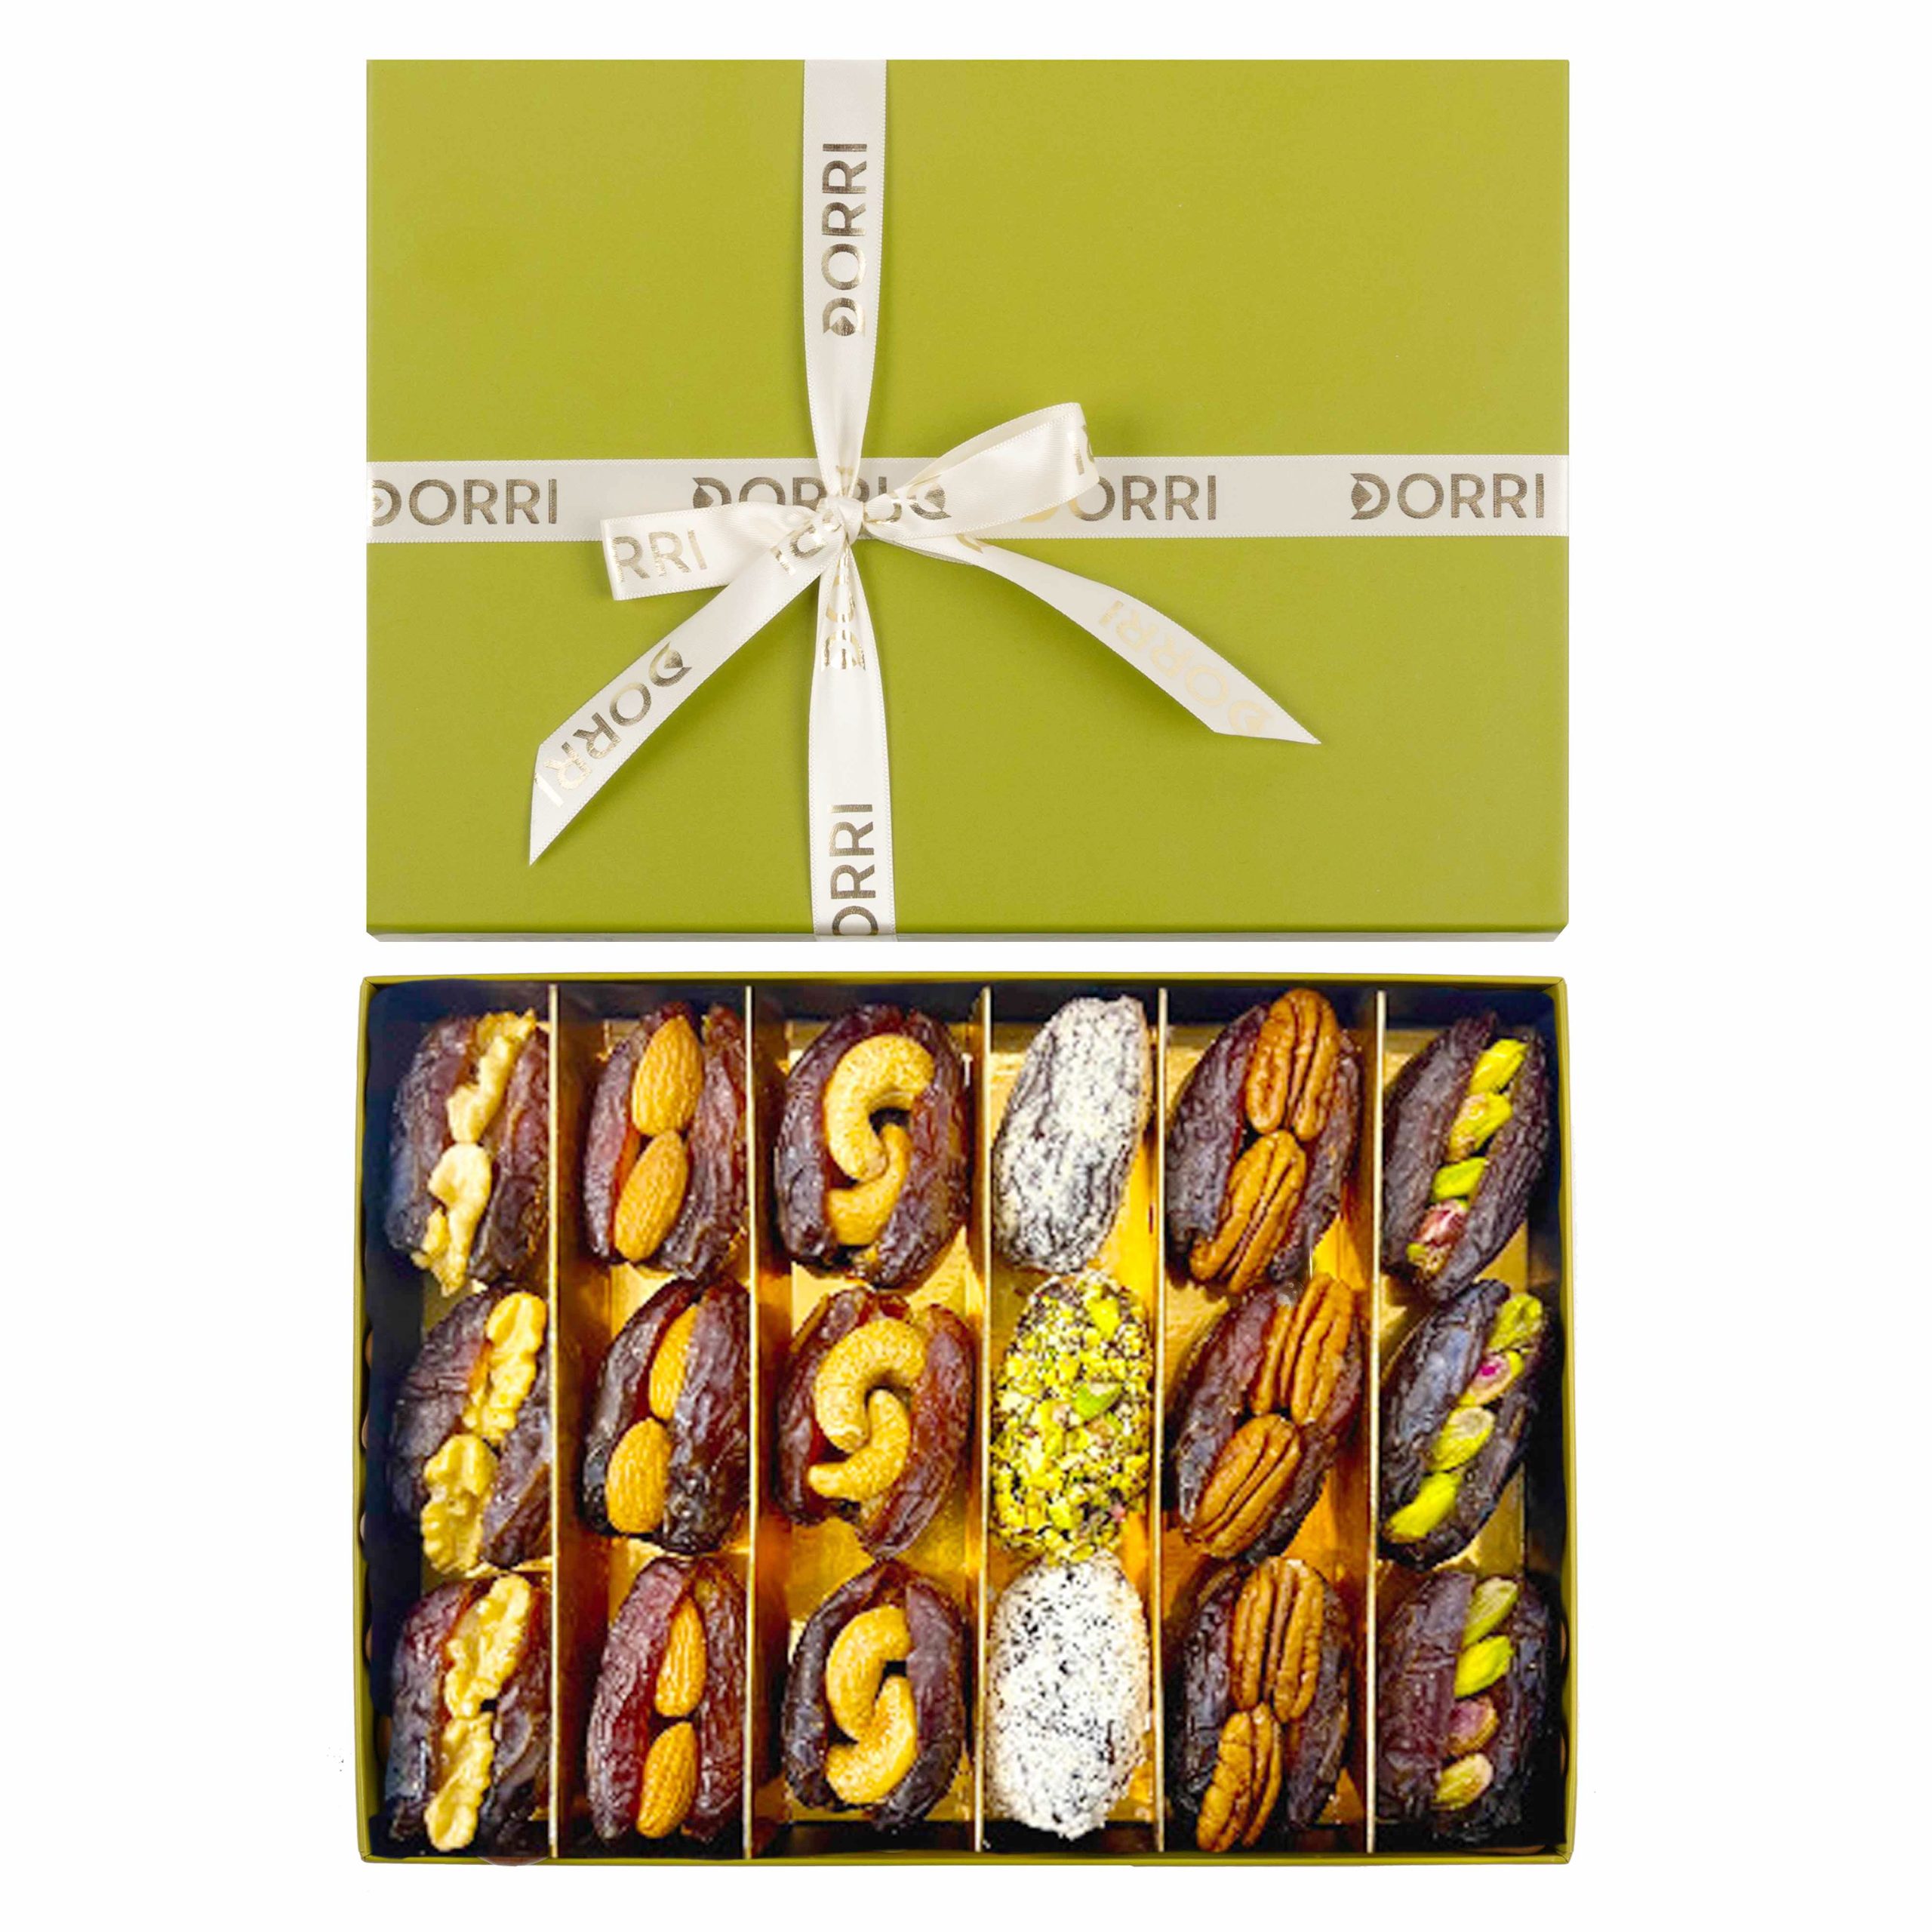 Dorri - Luxury Filled Medjool Dates with Nuts